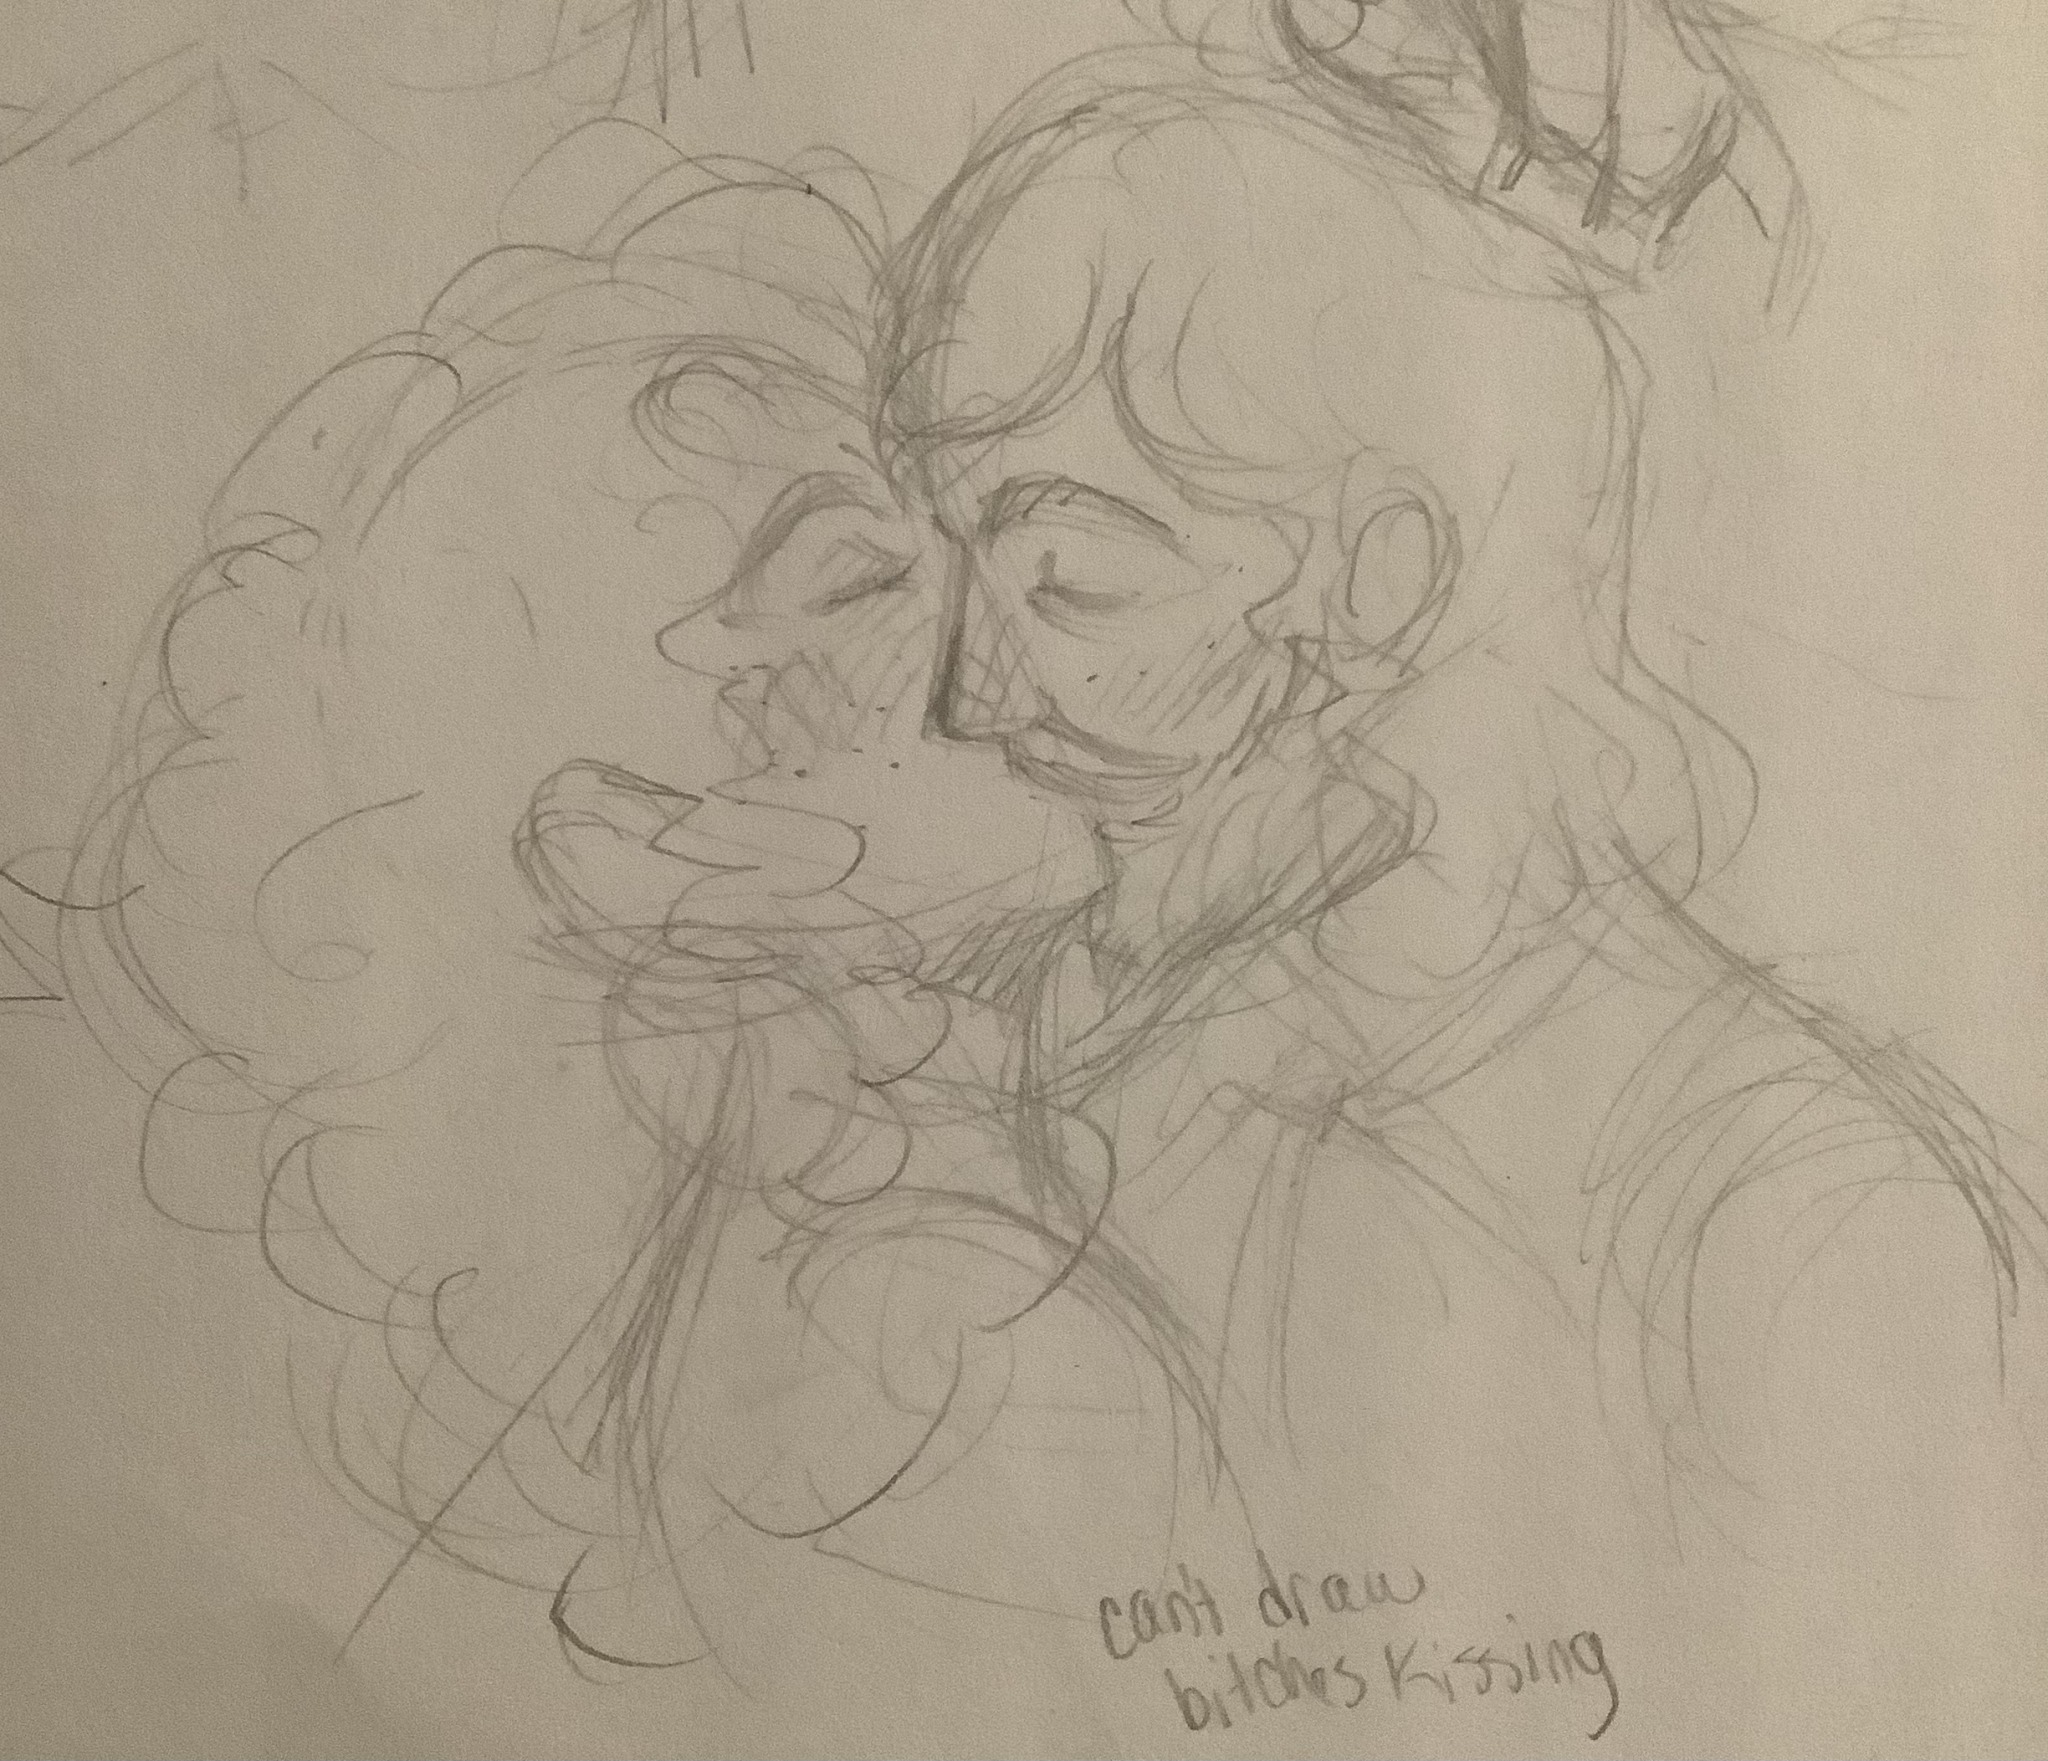 Marithur kiss attempt (Harmony and Horror)